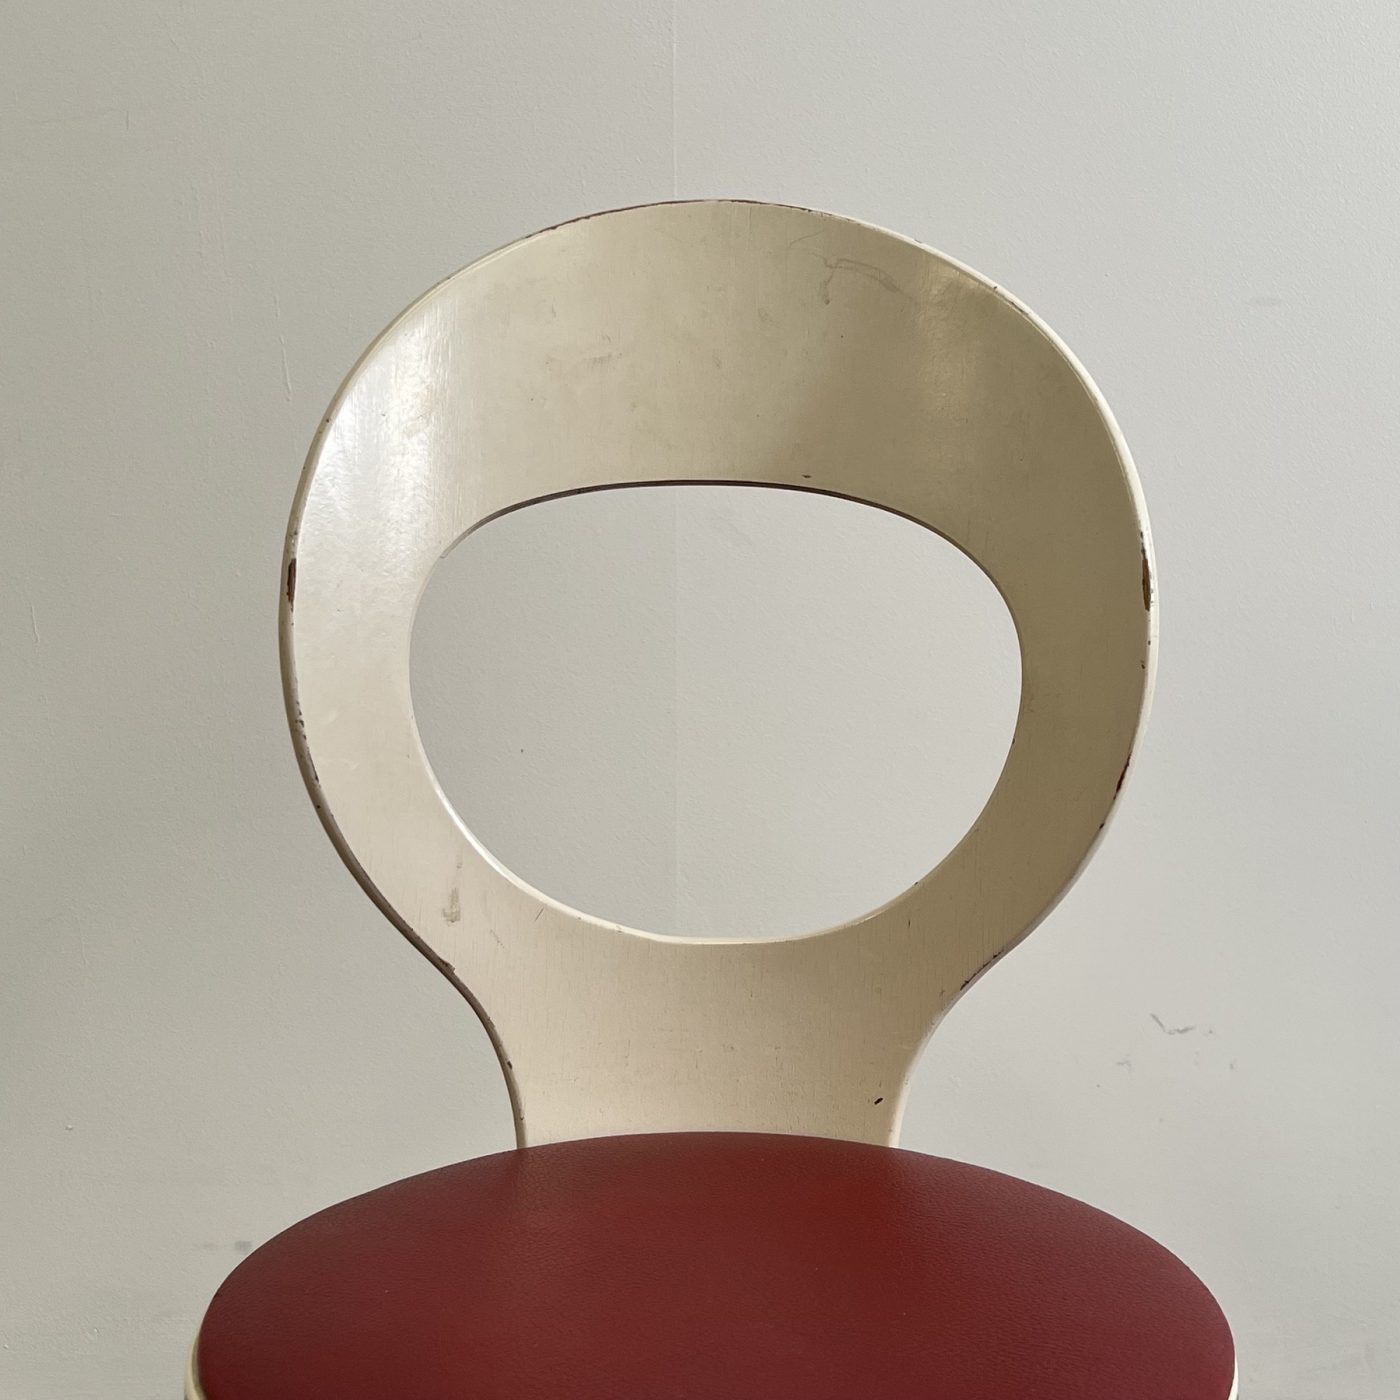 objet-vagabond-baumann-chairs0000